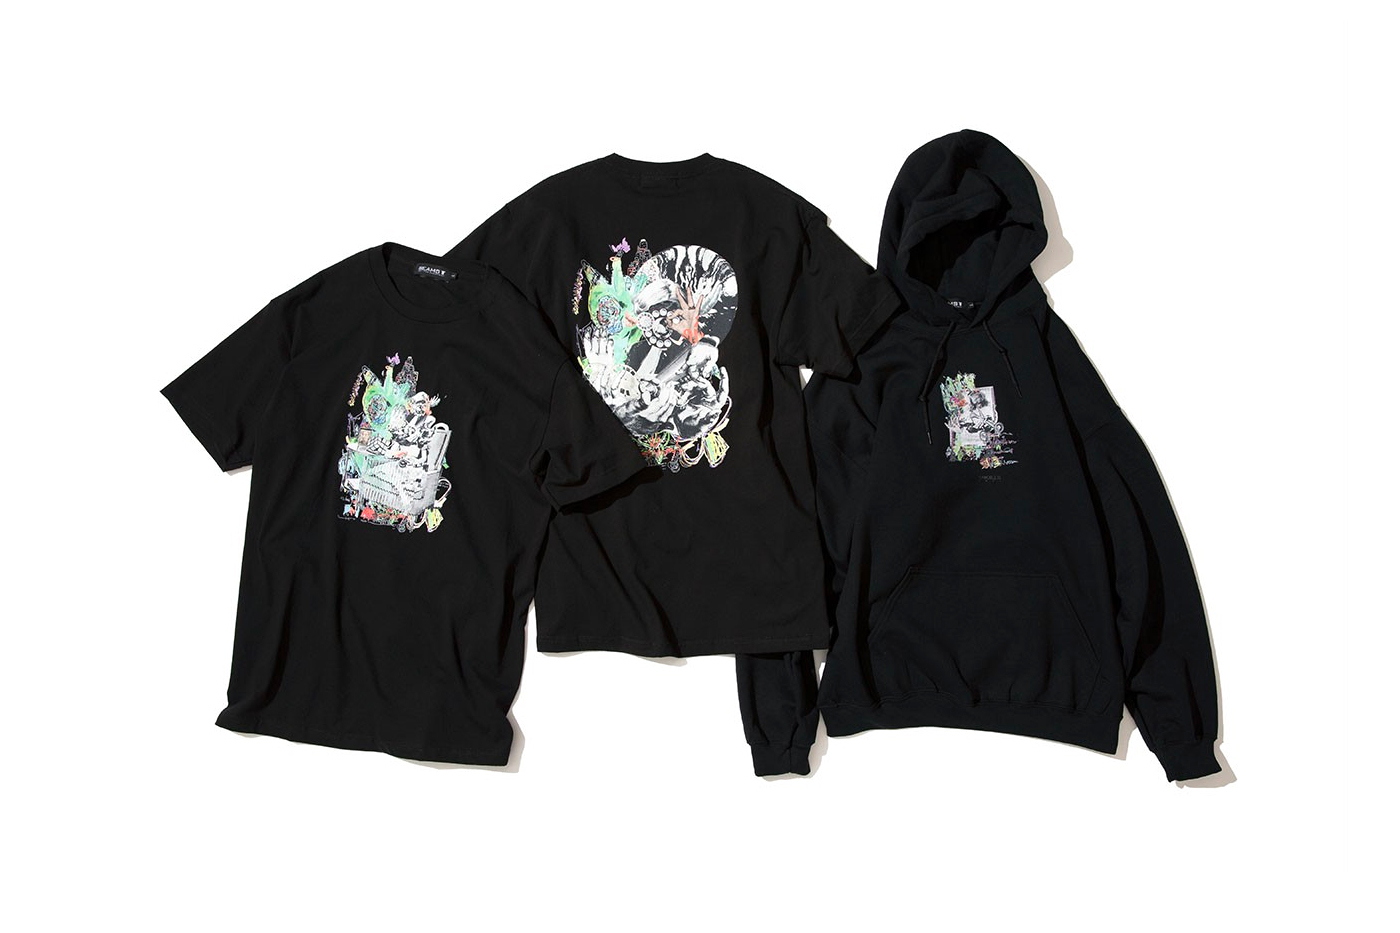 Kosuke Kawamura BLACK SMOKER RECORDS Capsule menswear streetwear spring summer 2020 collection ss20 beams t harajuku tokyo artist collage T shirt hoodies